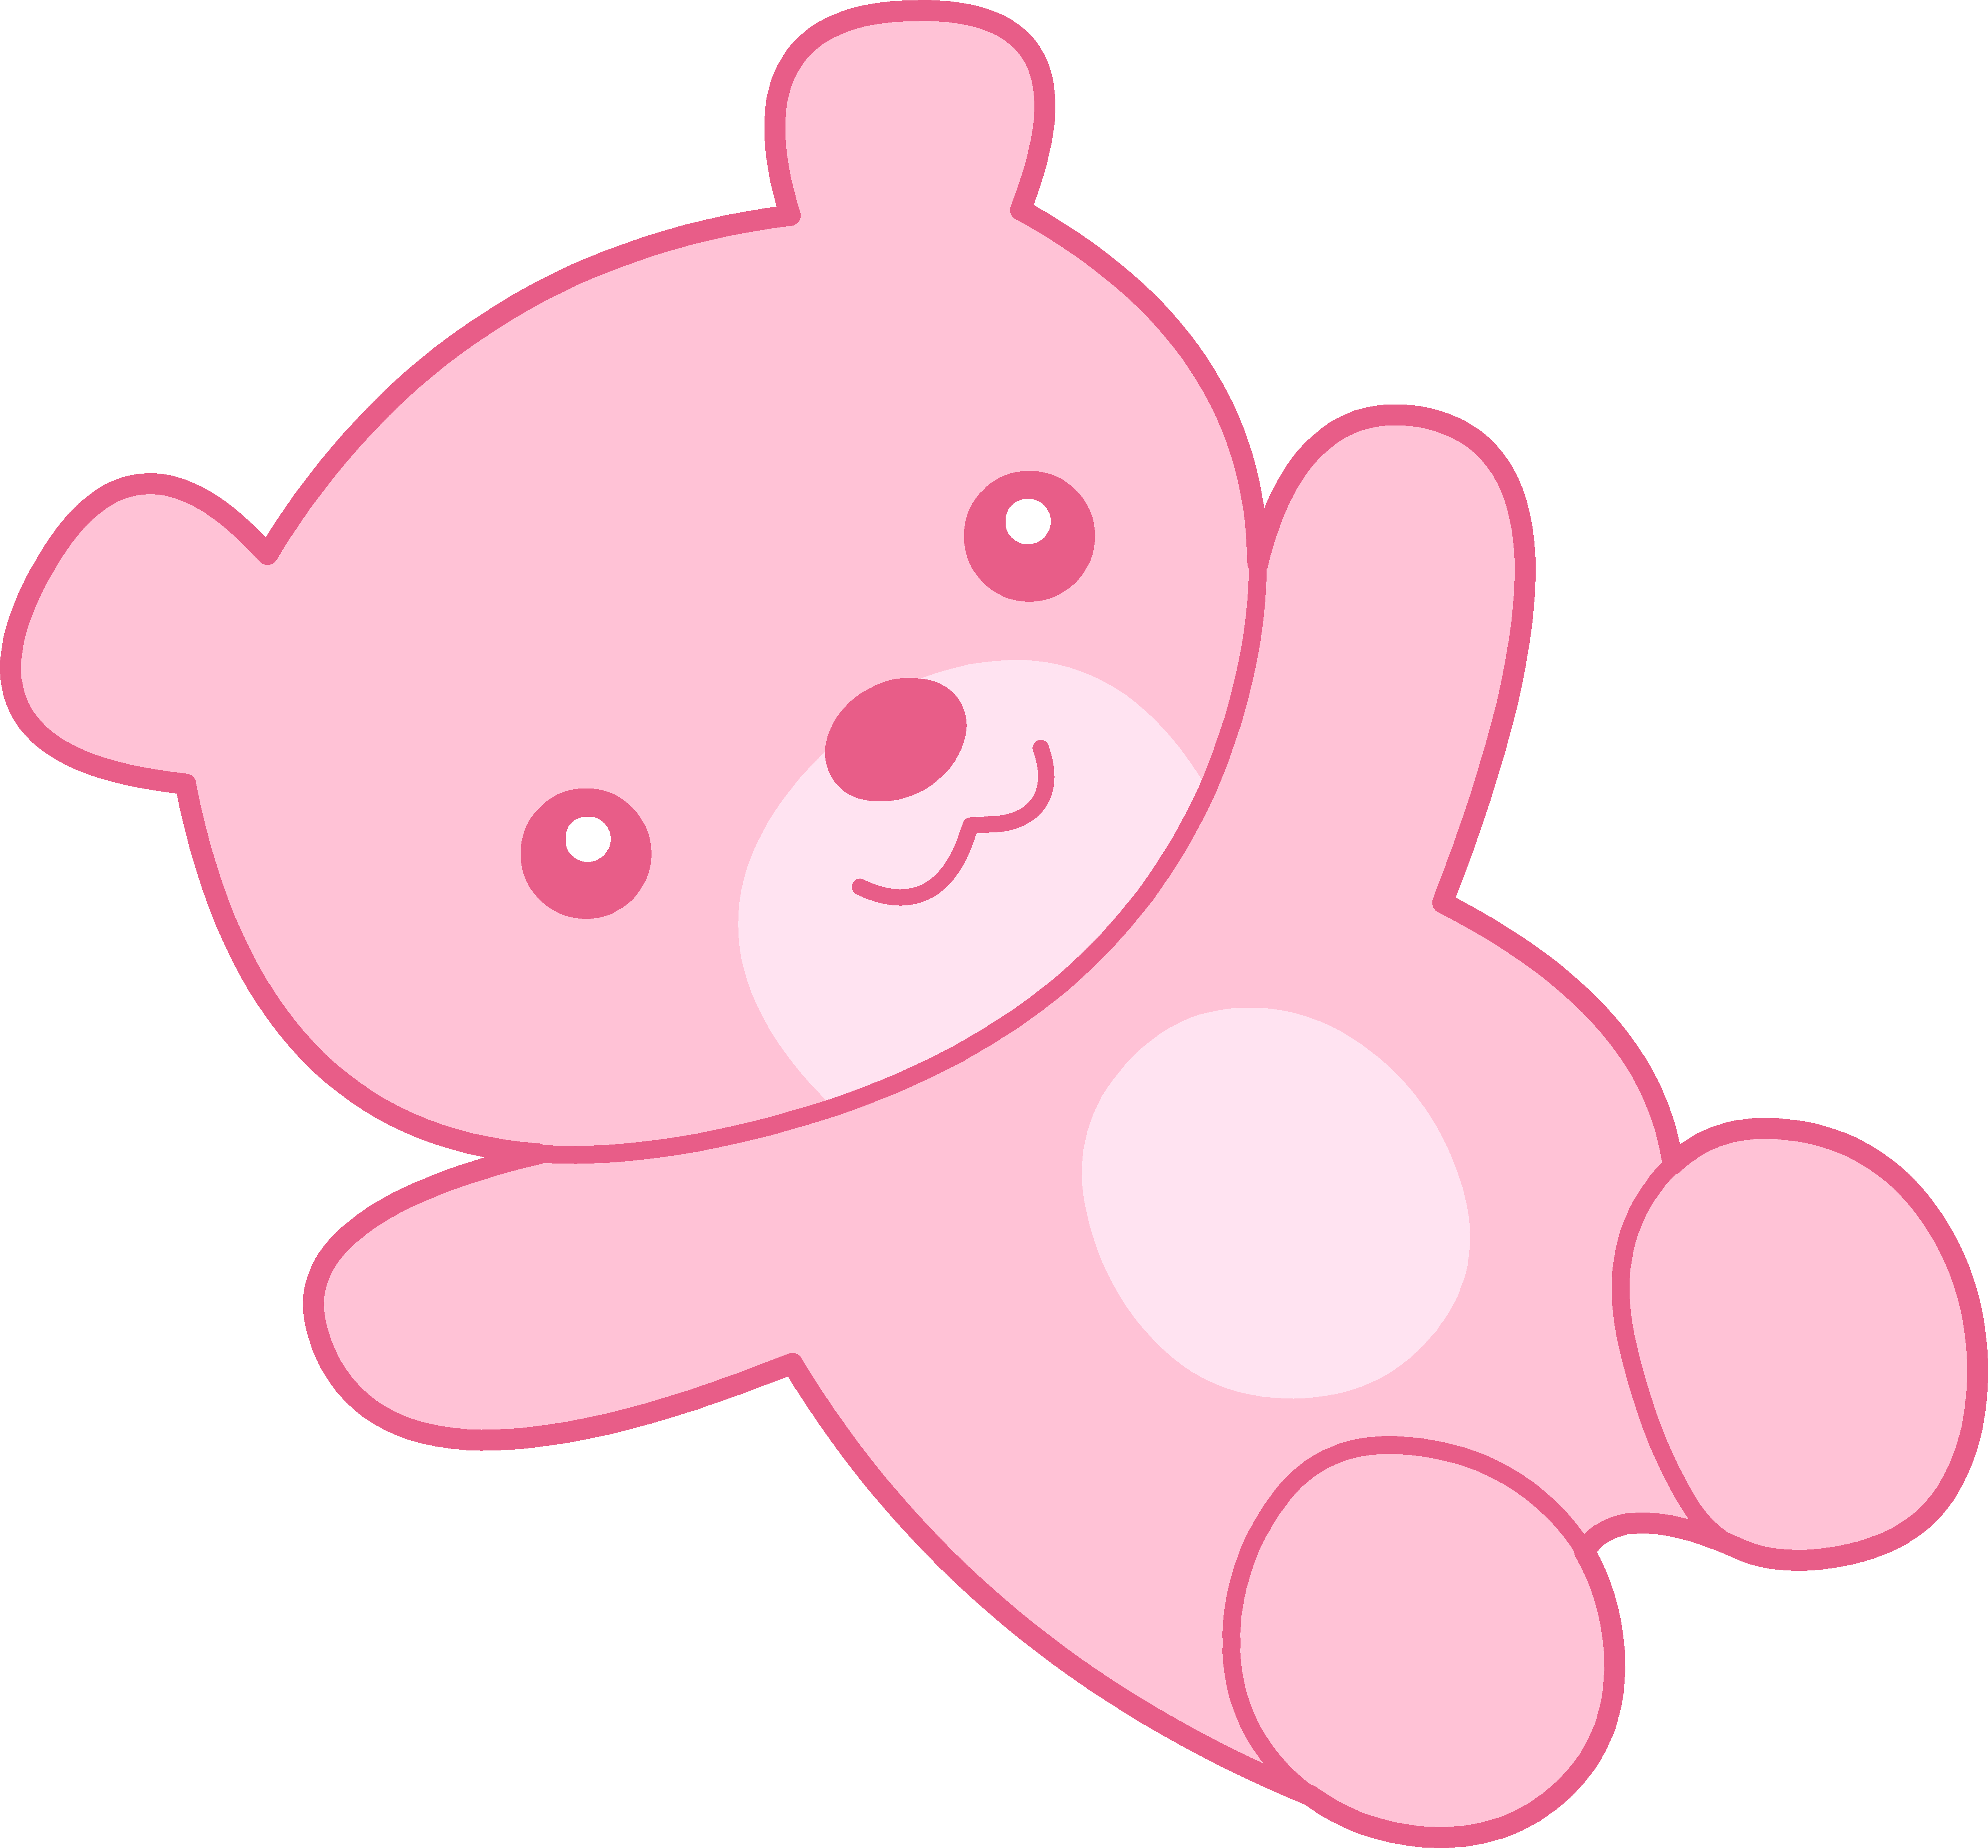 Cute Pink Teddy Bear Clipart